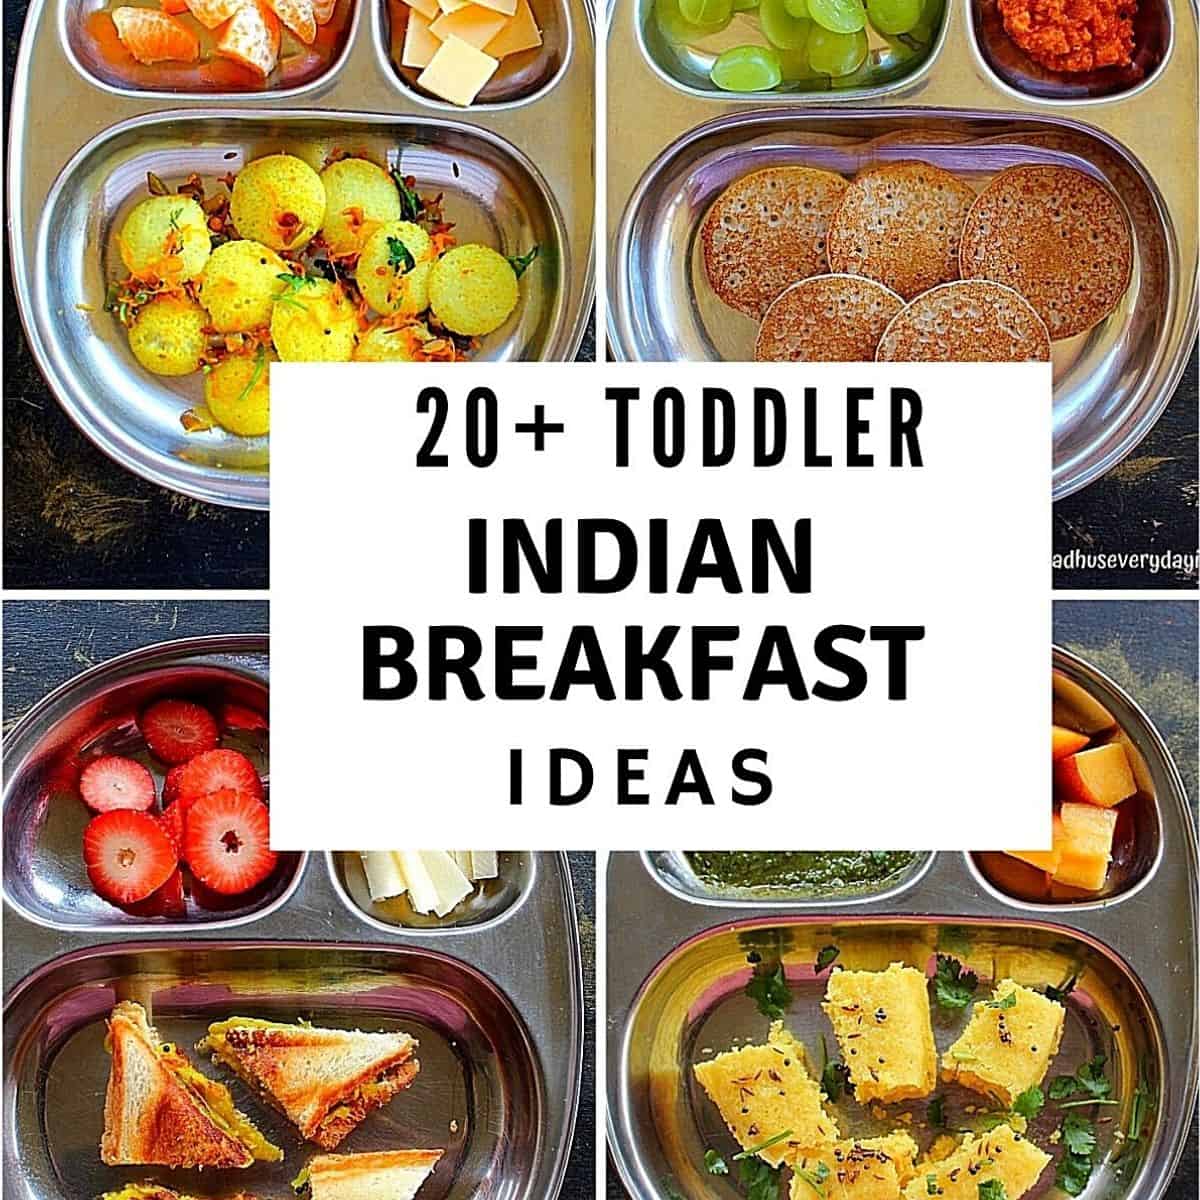 https://www.madhuseverydayindian.com/wp-content/uploads/2021/02/toddler-indian-breakfast-recipes.jpg